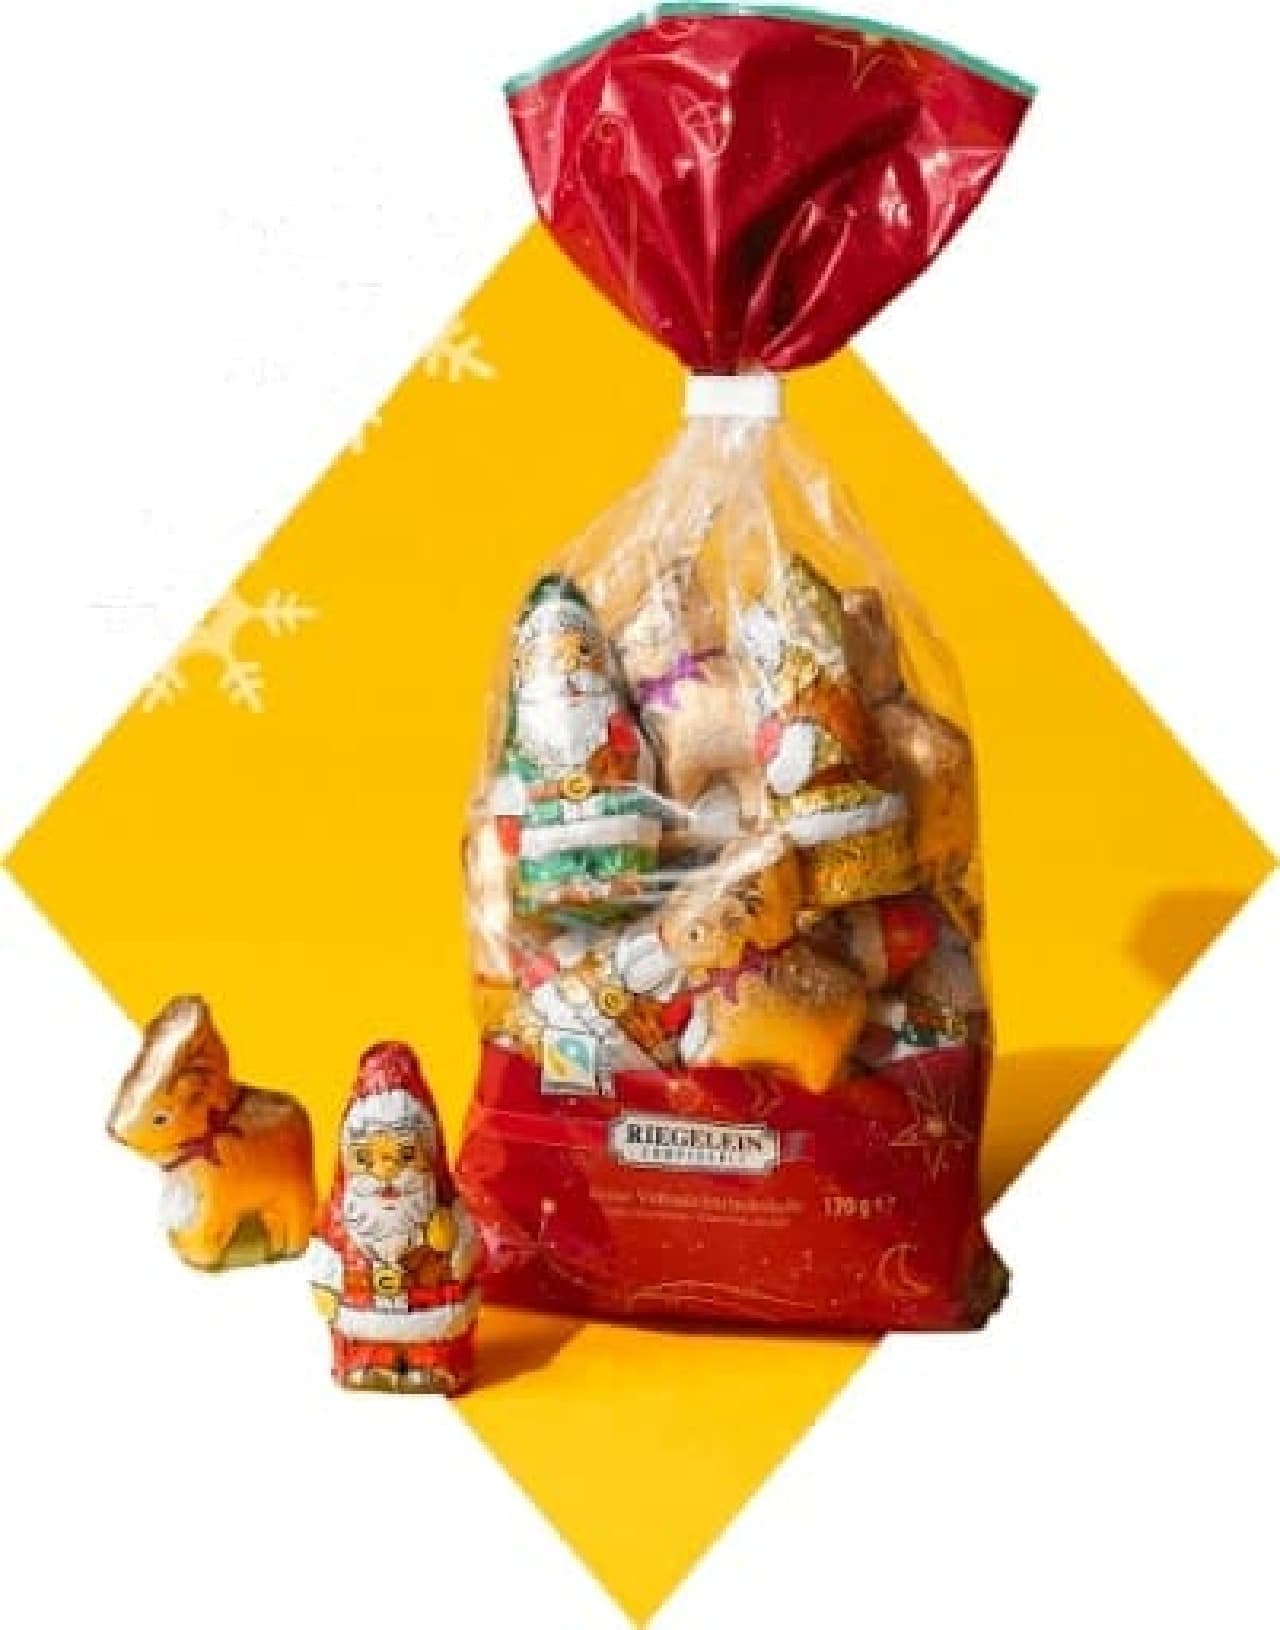 KALDI "Ligerine Santa & Rainier Chocolate".